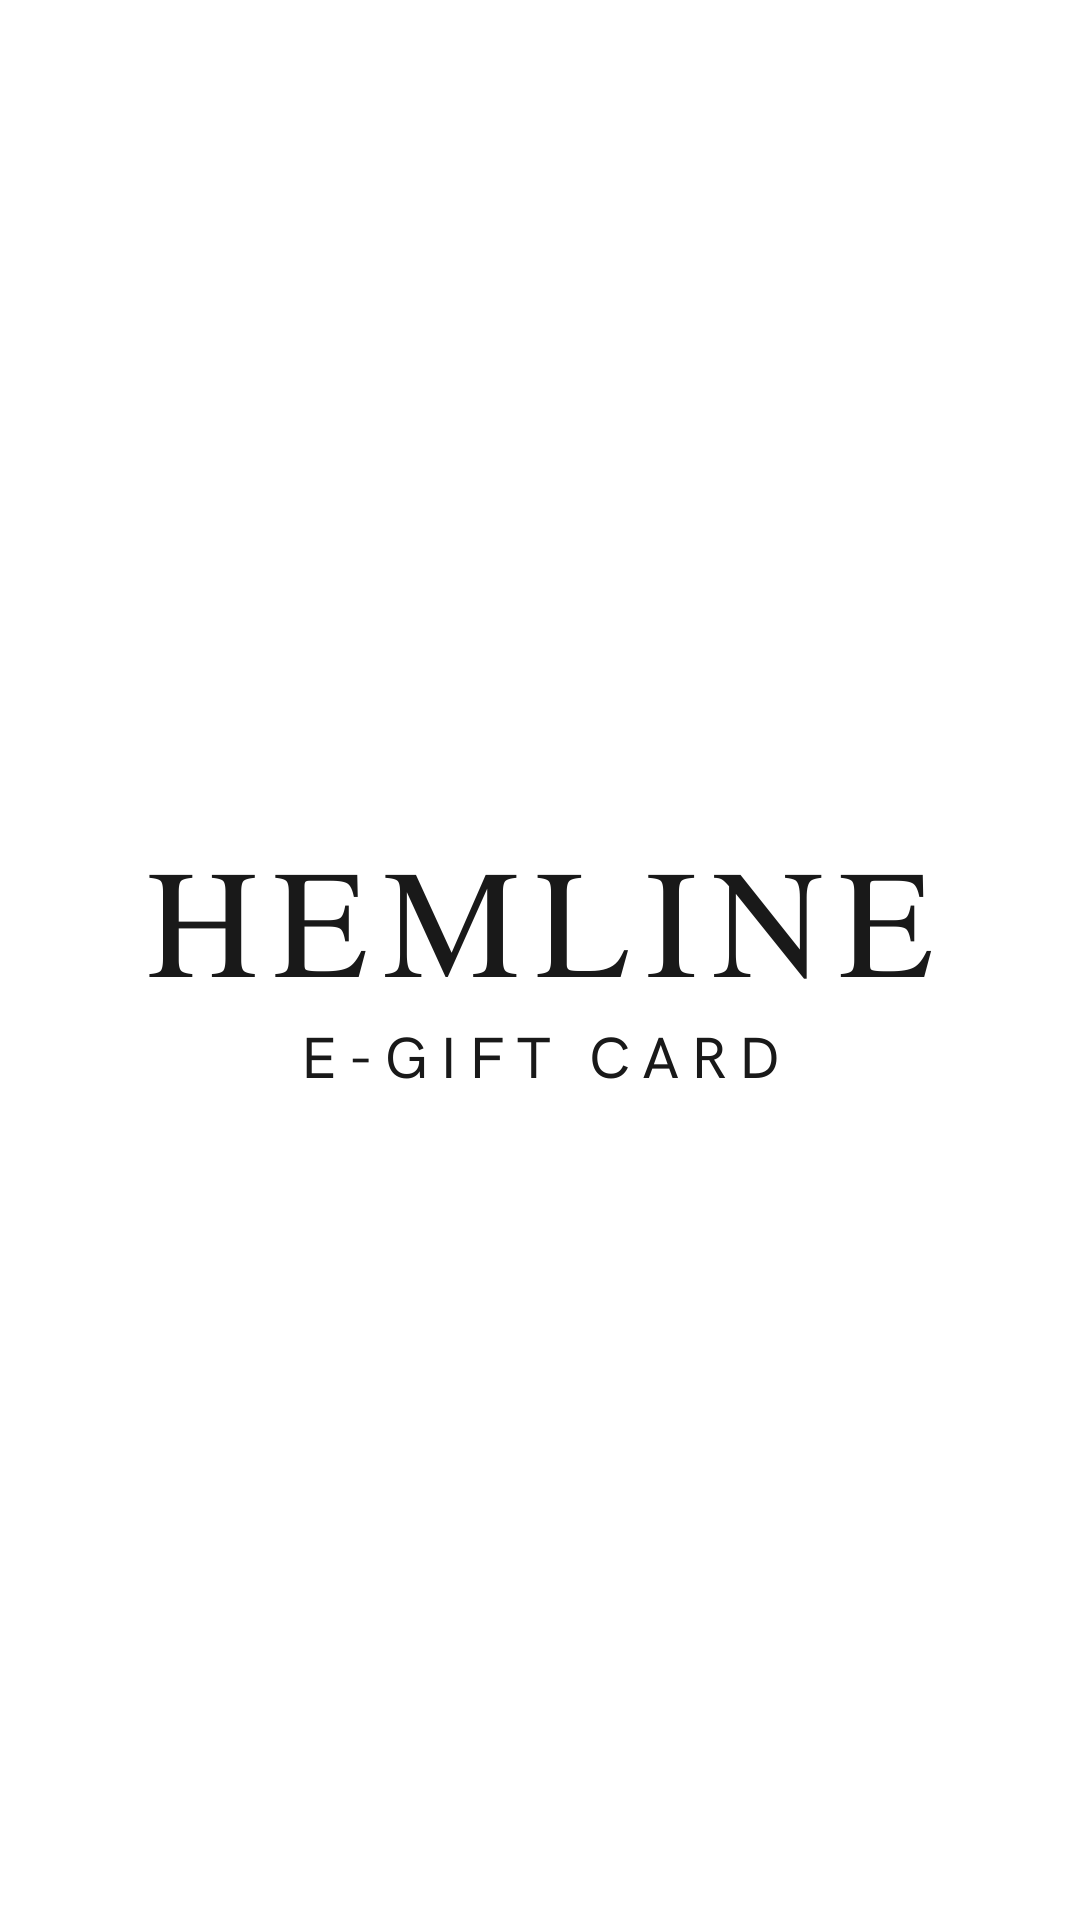 Hemline Magazine E-Gift Card